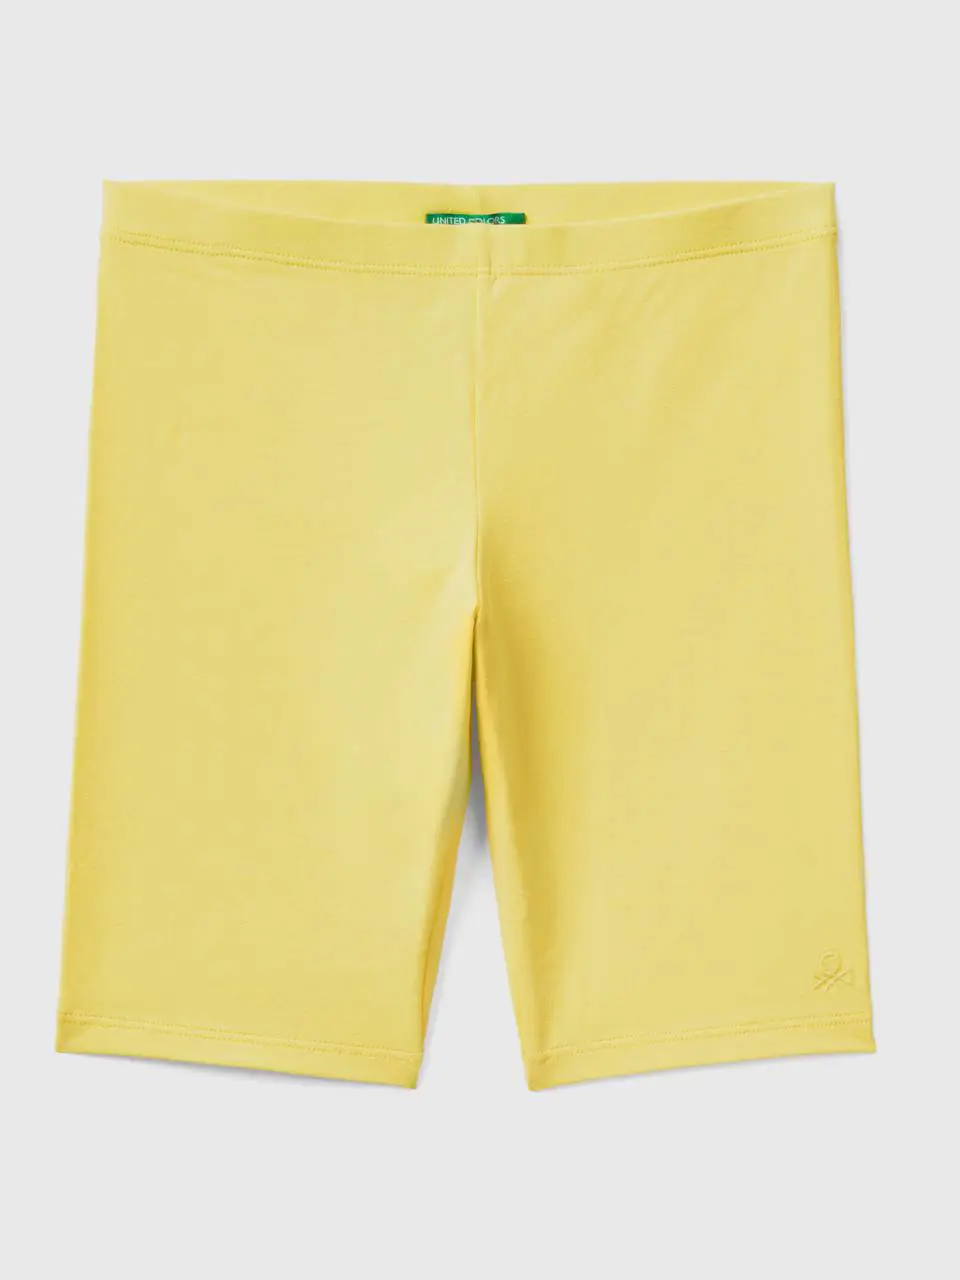 Benetton short leggings in stretch cotton. 1